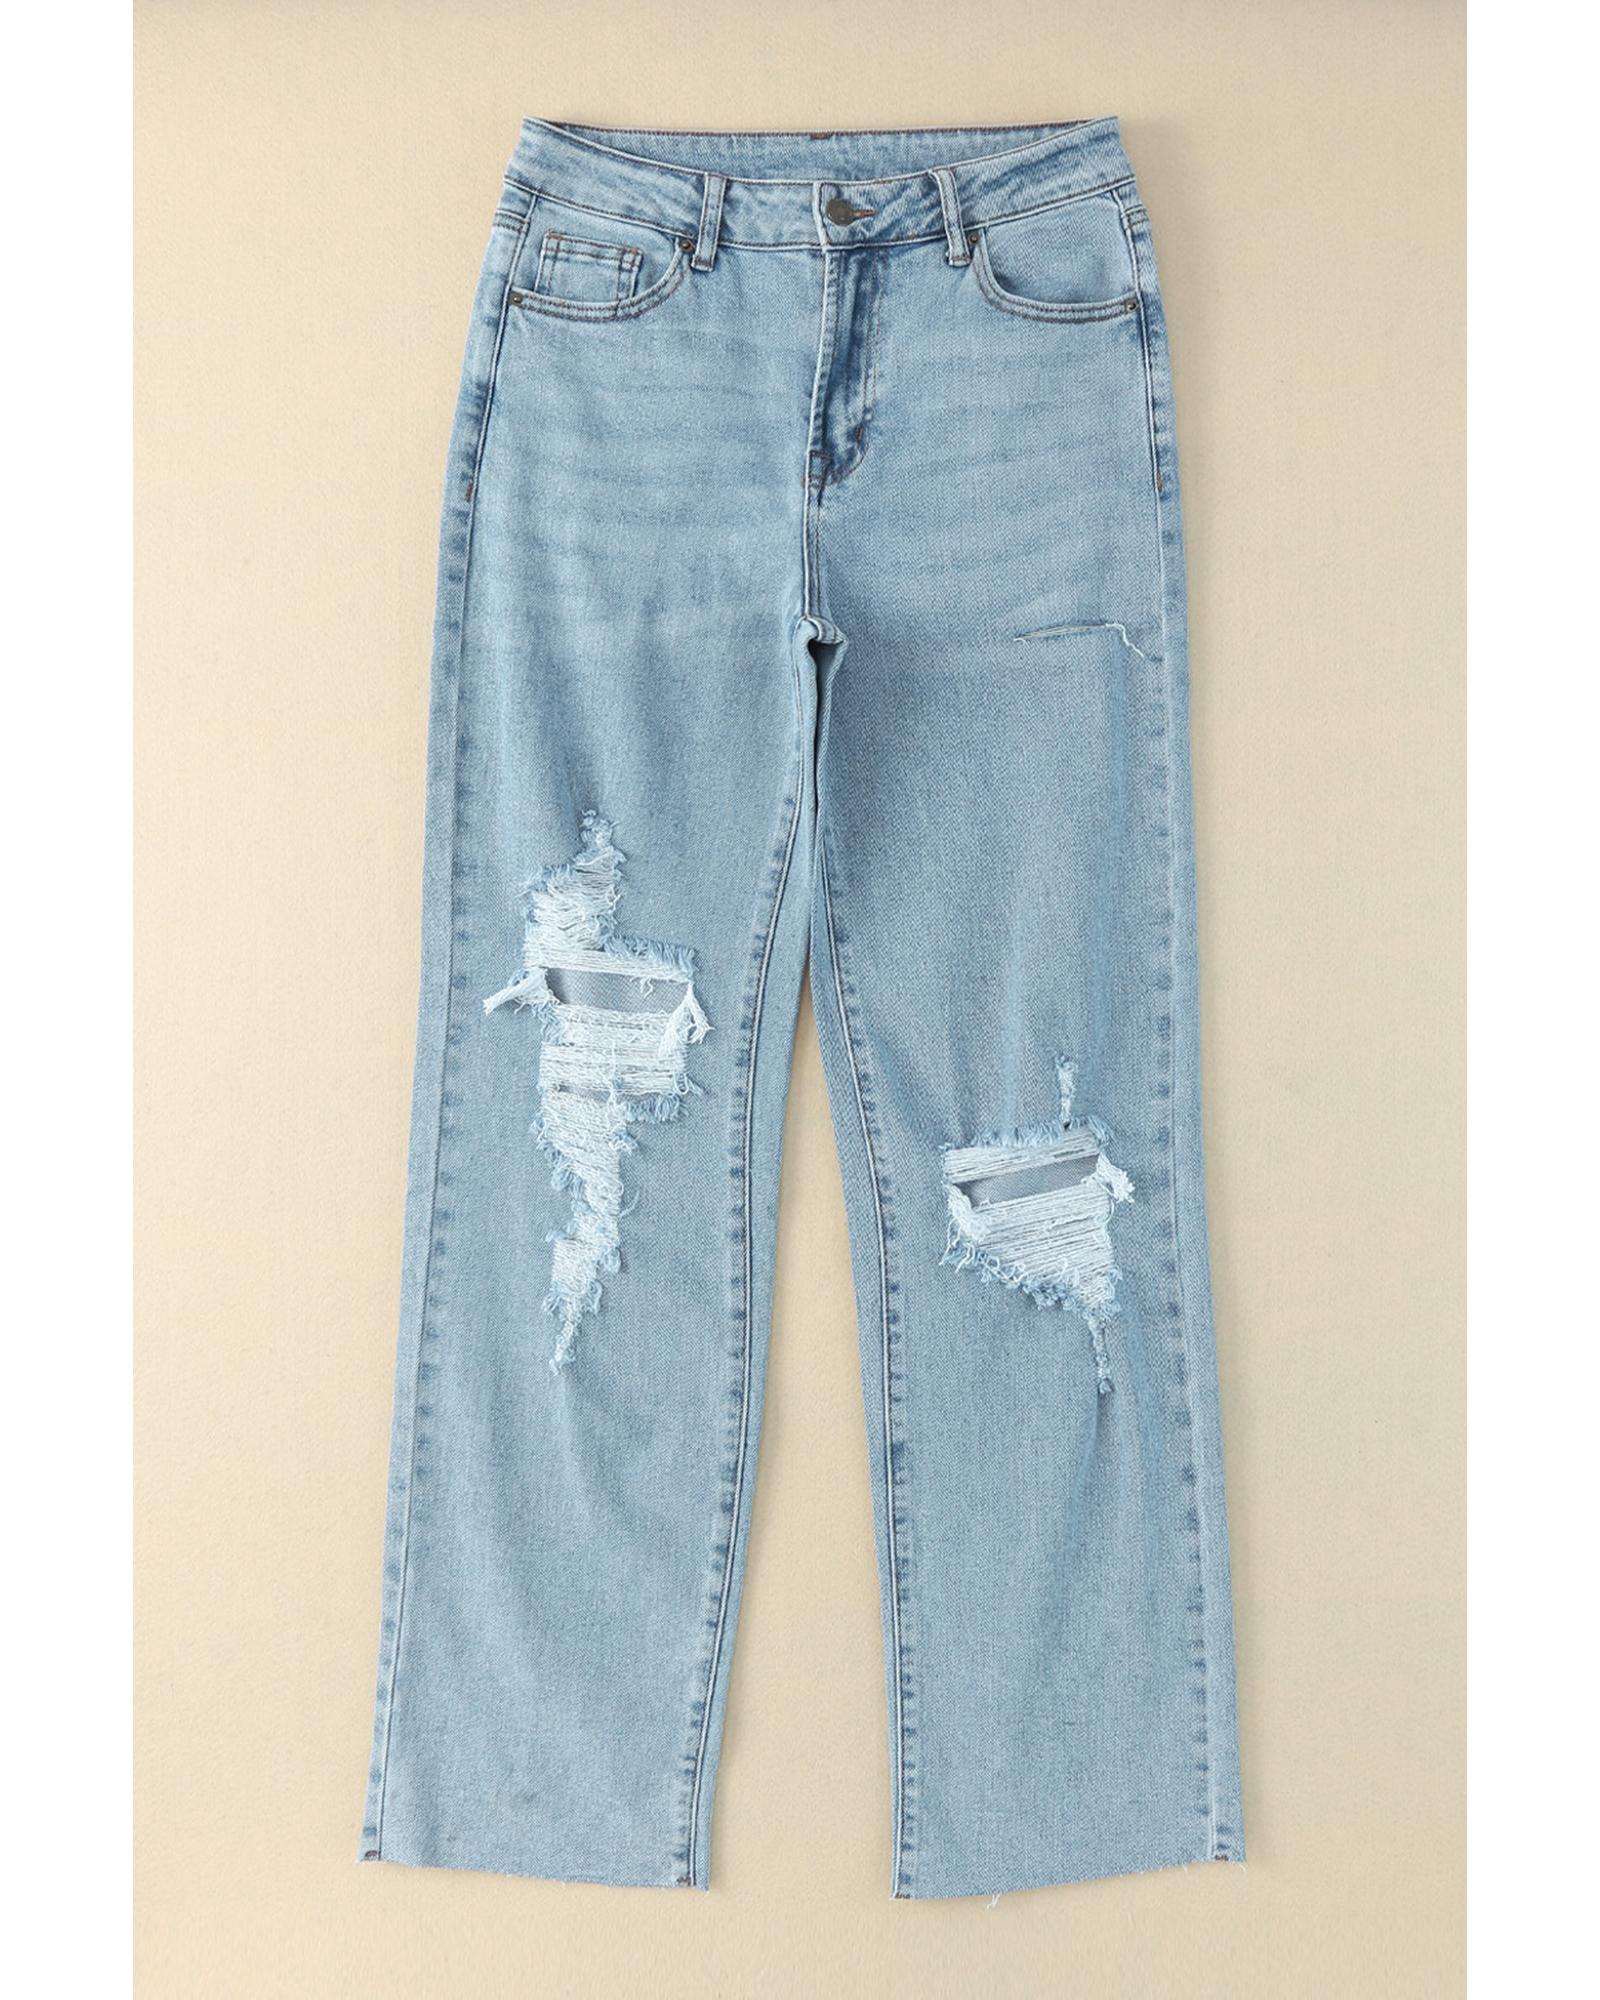 Distressed Straight Leg Jeans with Frayed Hem - 14 US